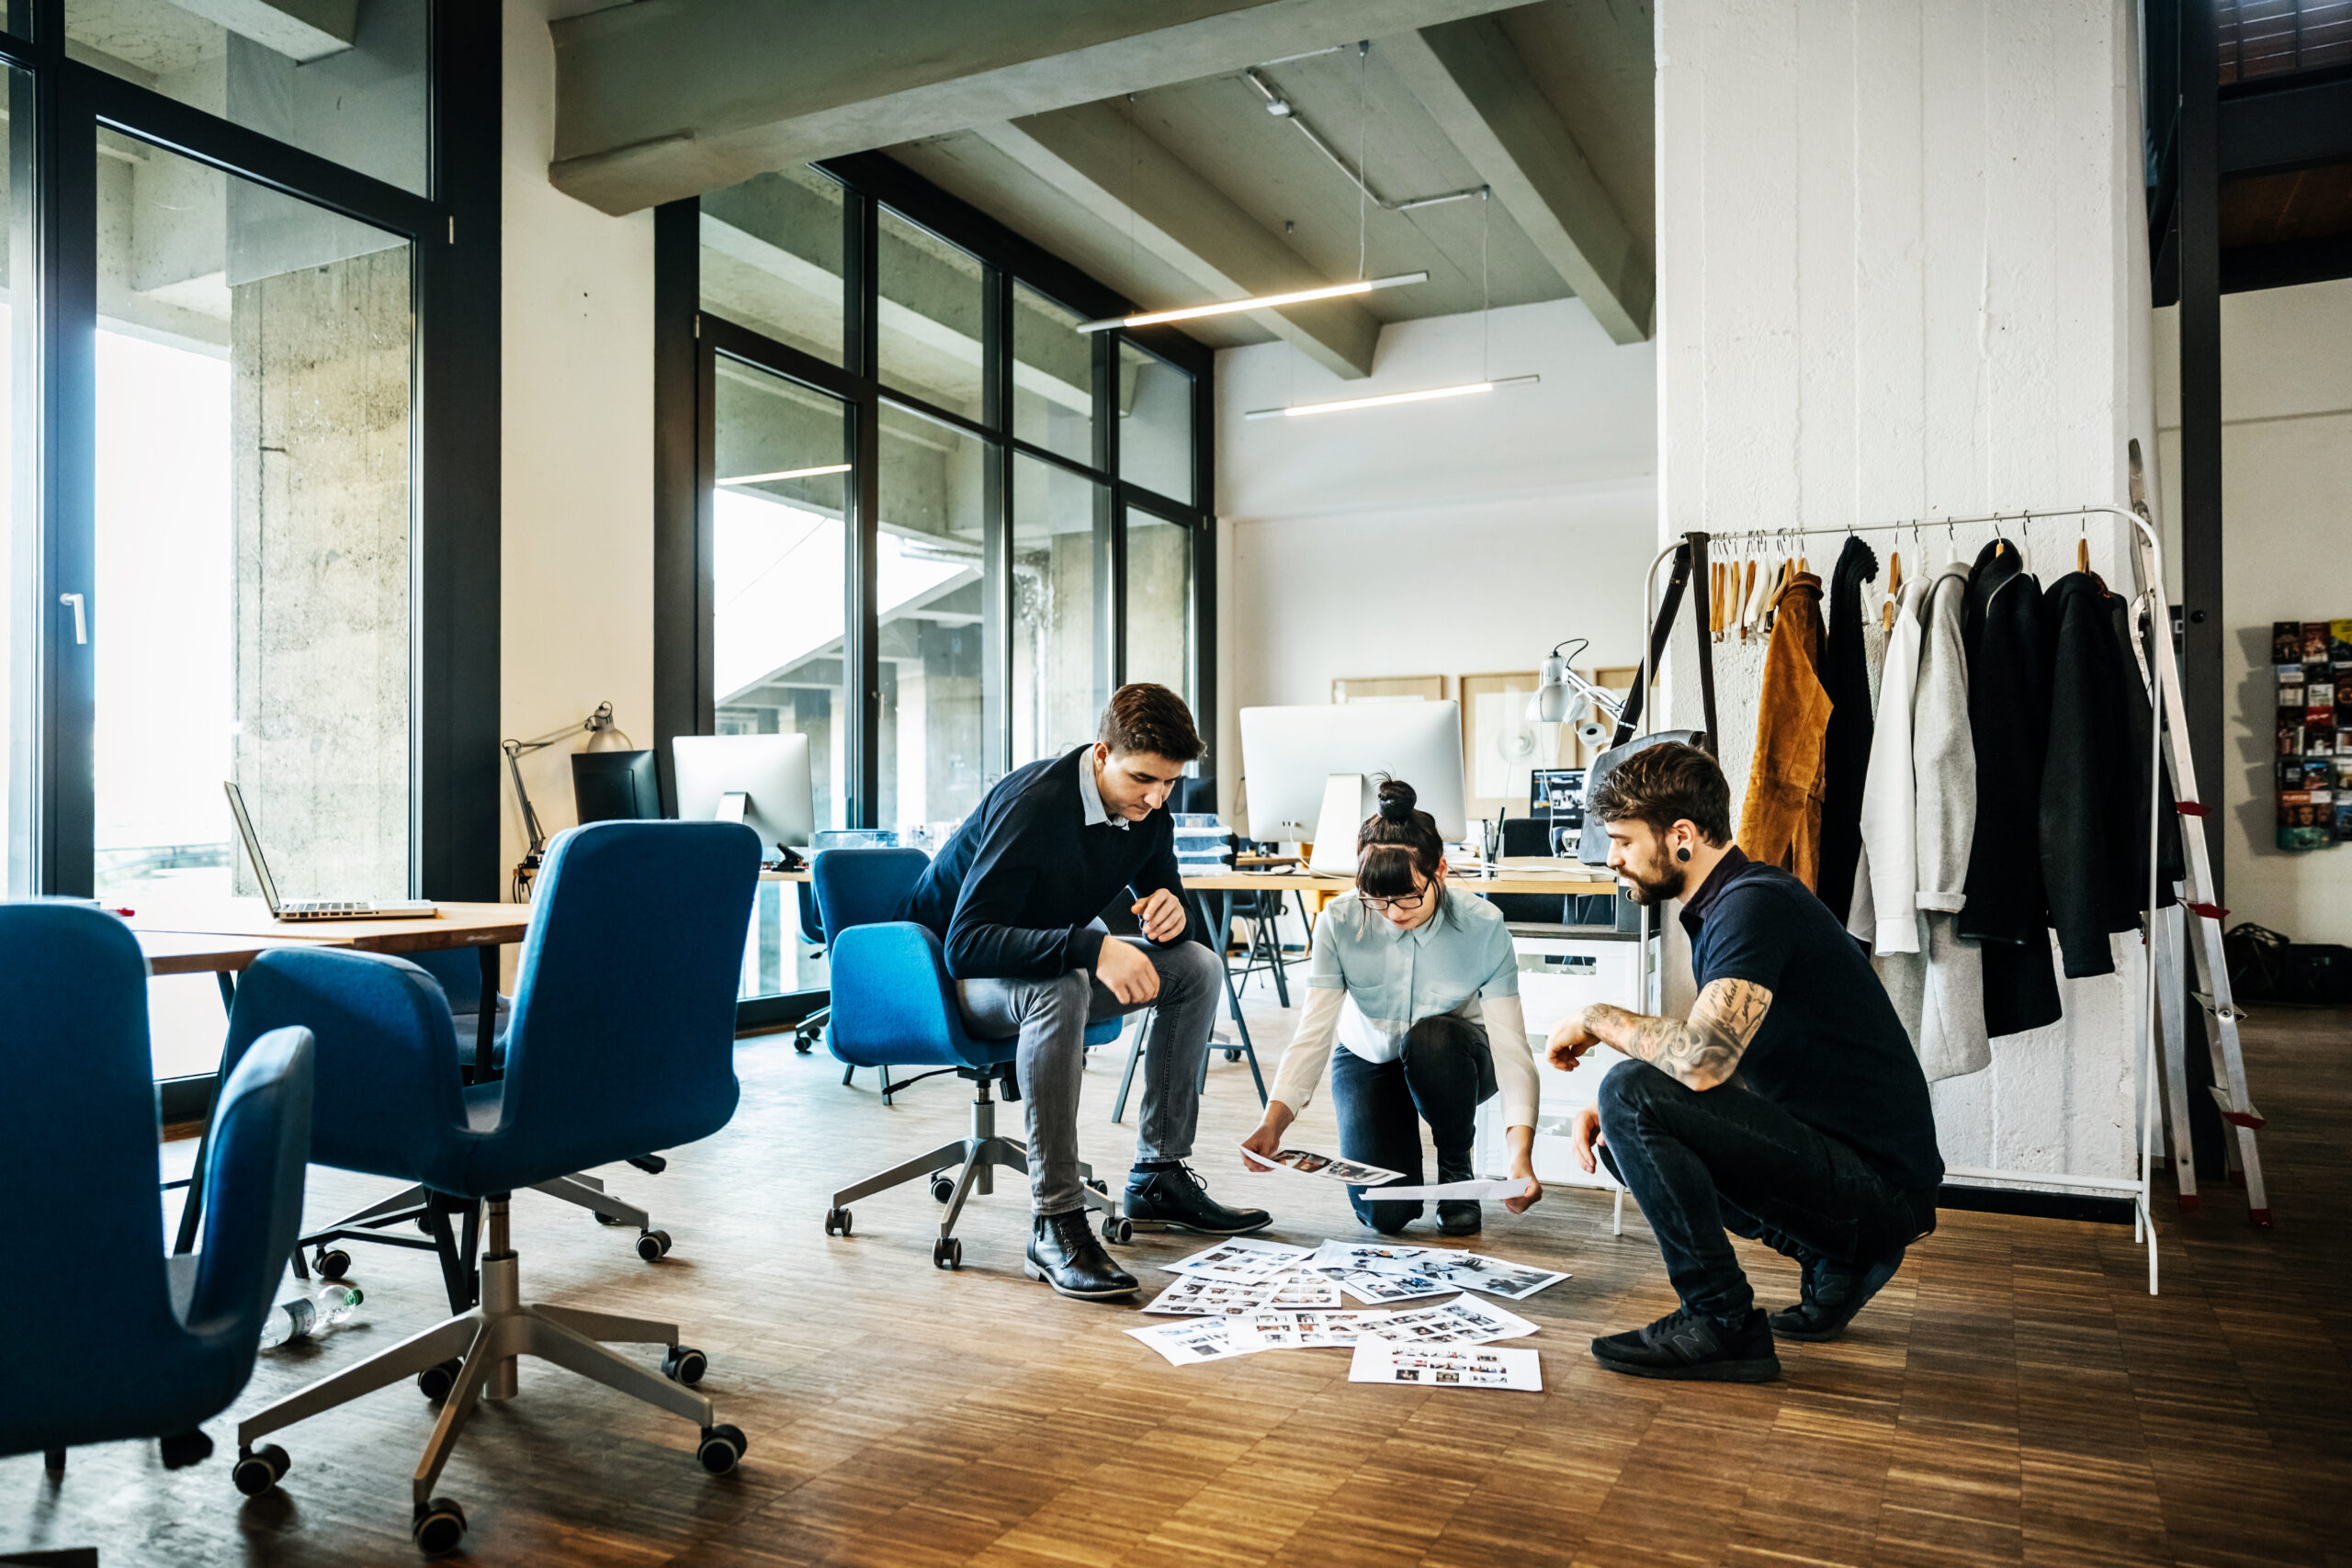 Creative new business people brainstorming in modern office loft